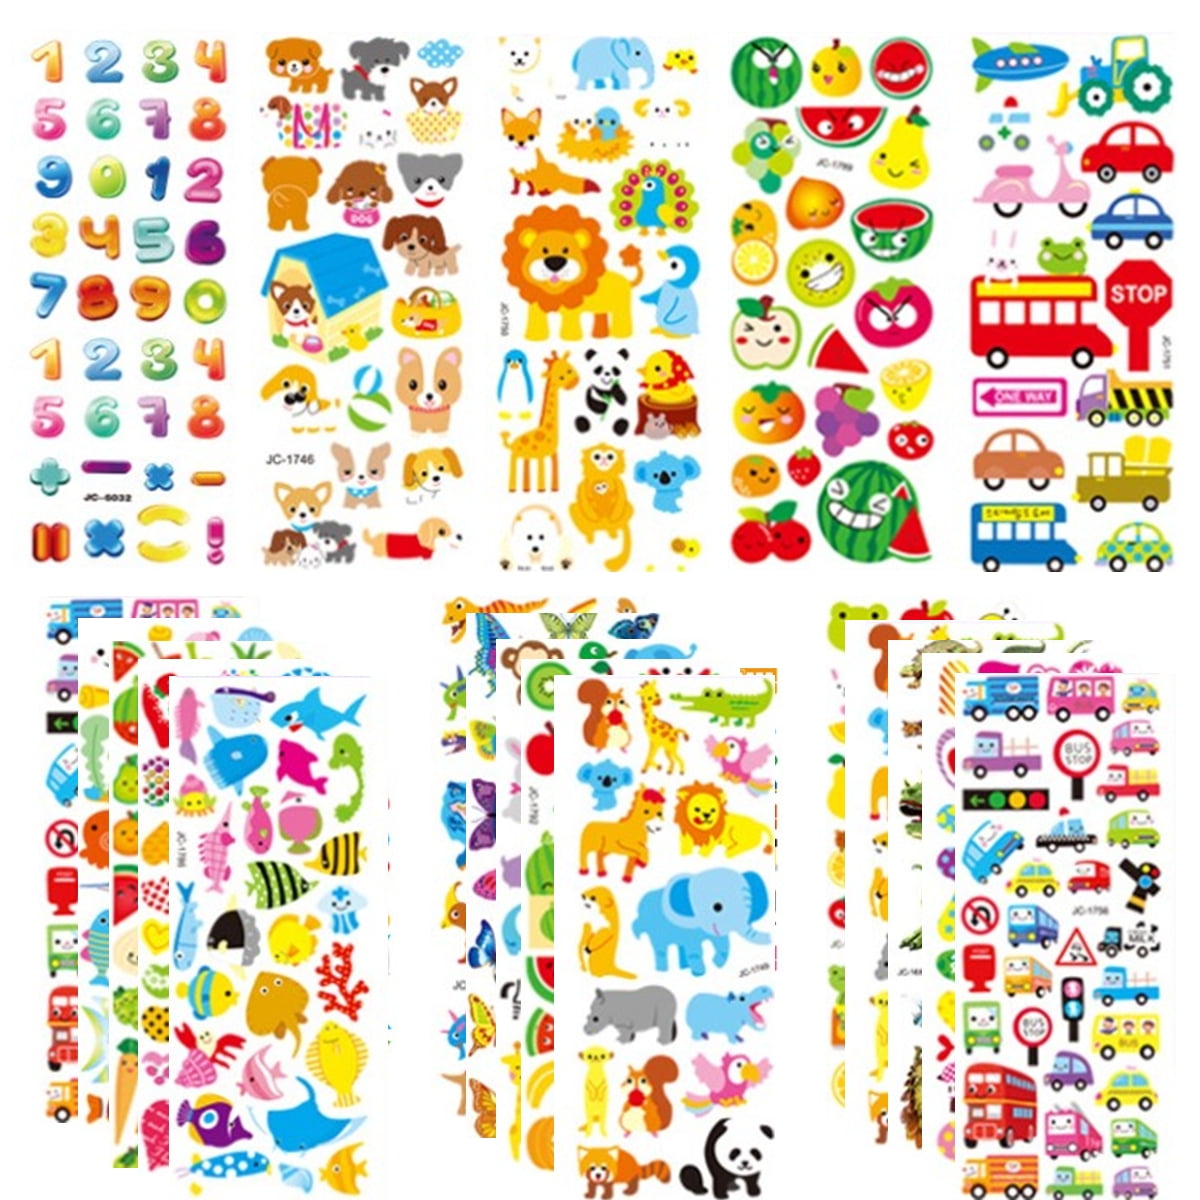 157ct 3D Puffy Stickers - Mondo Llama™